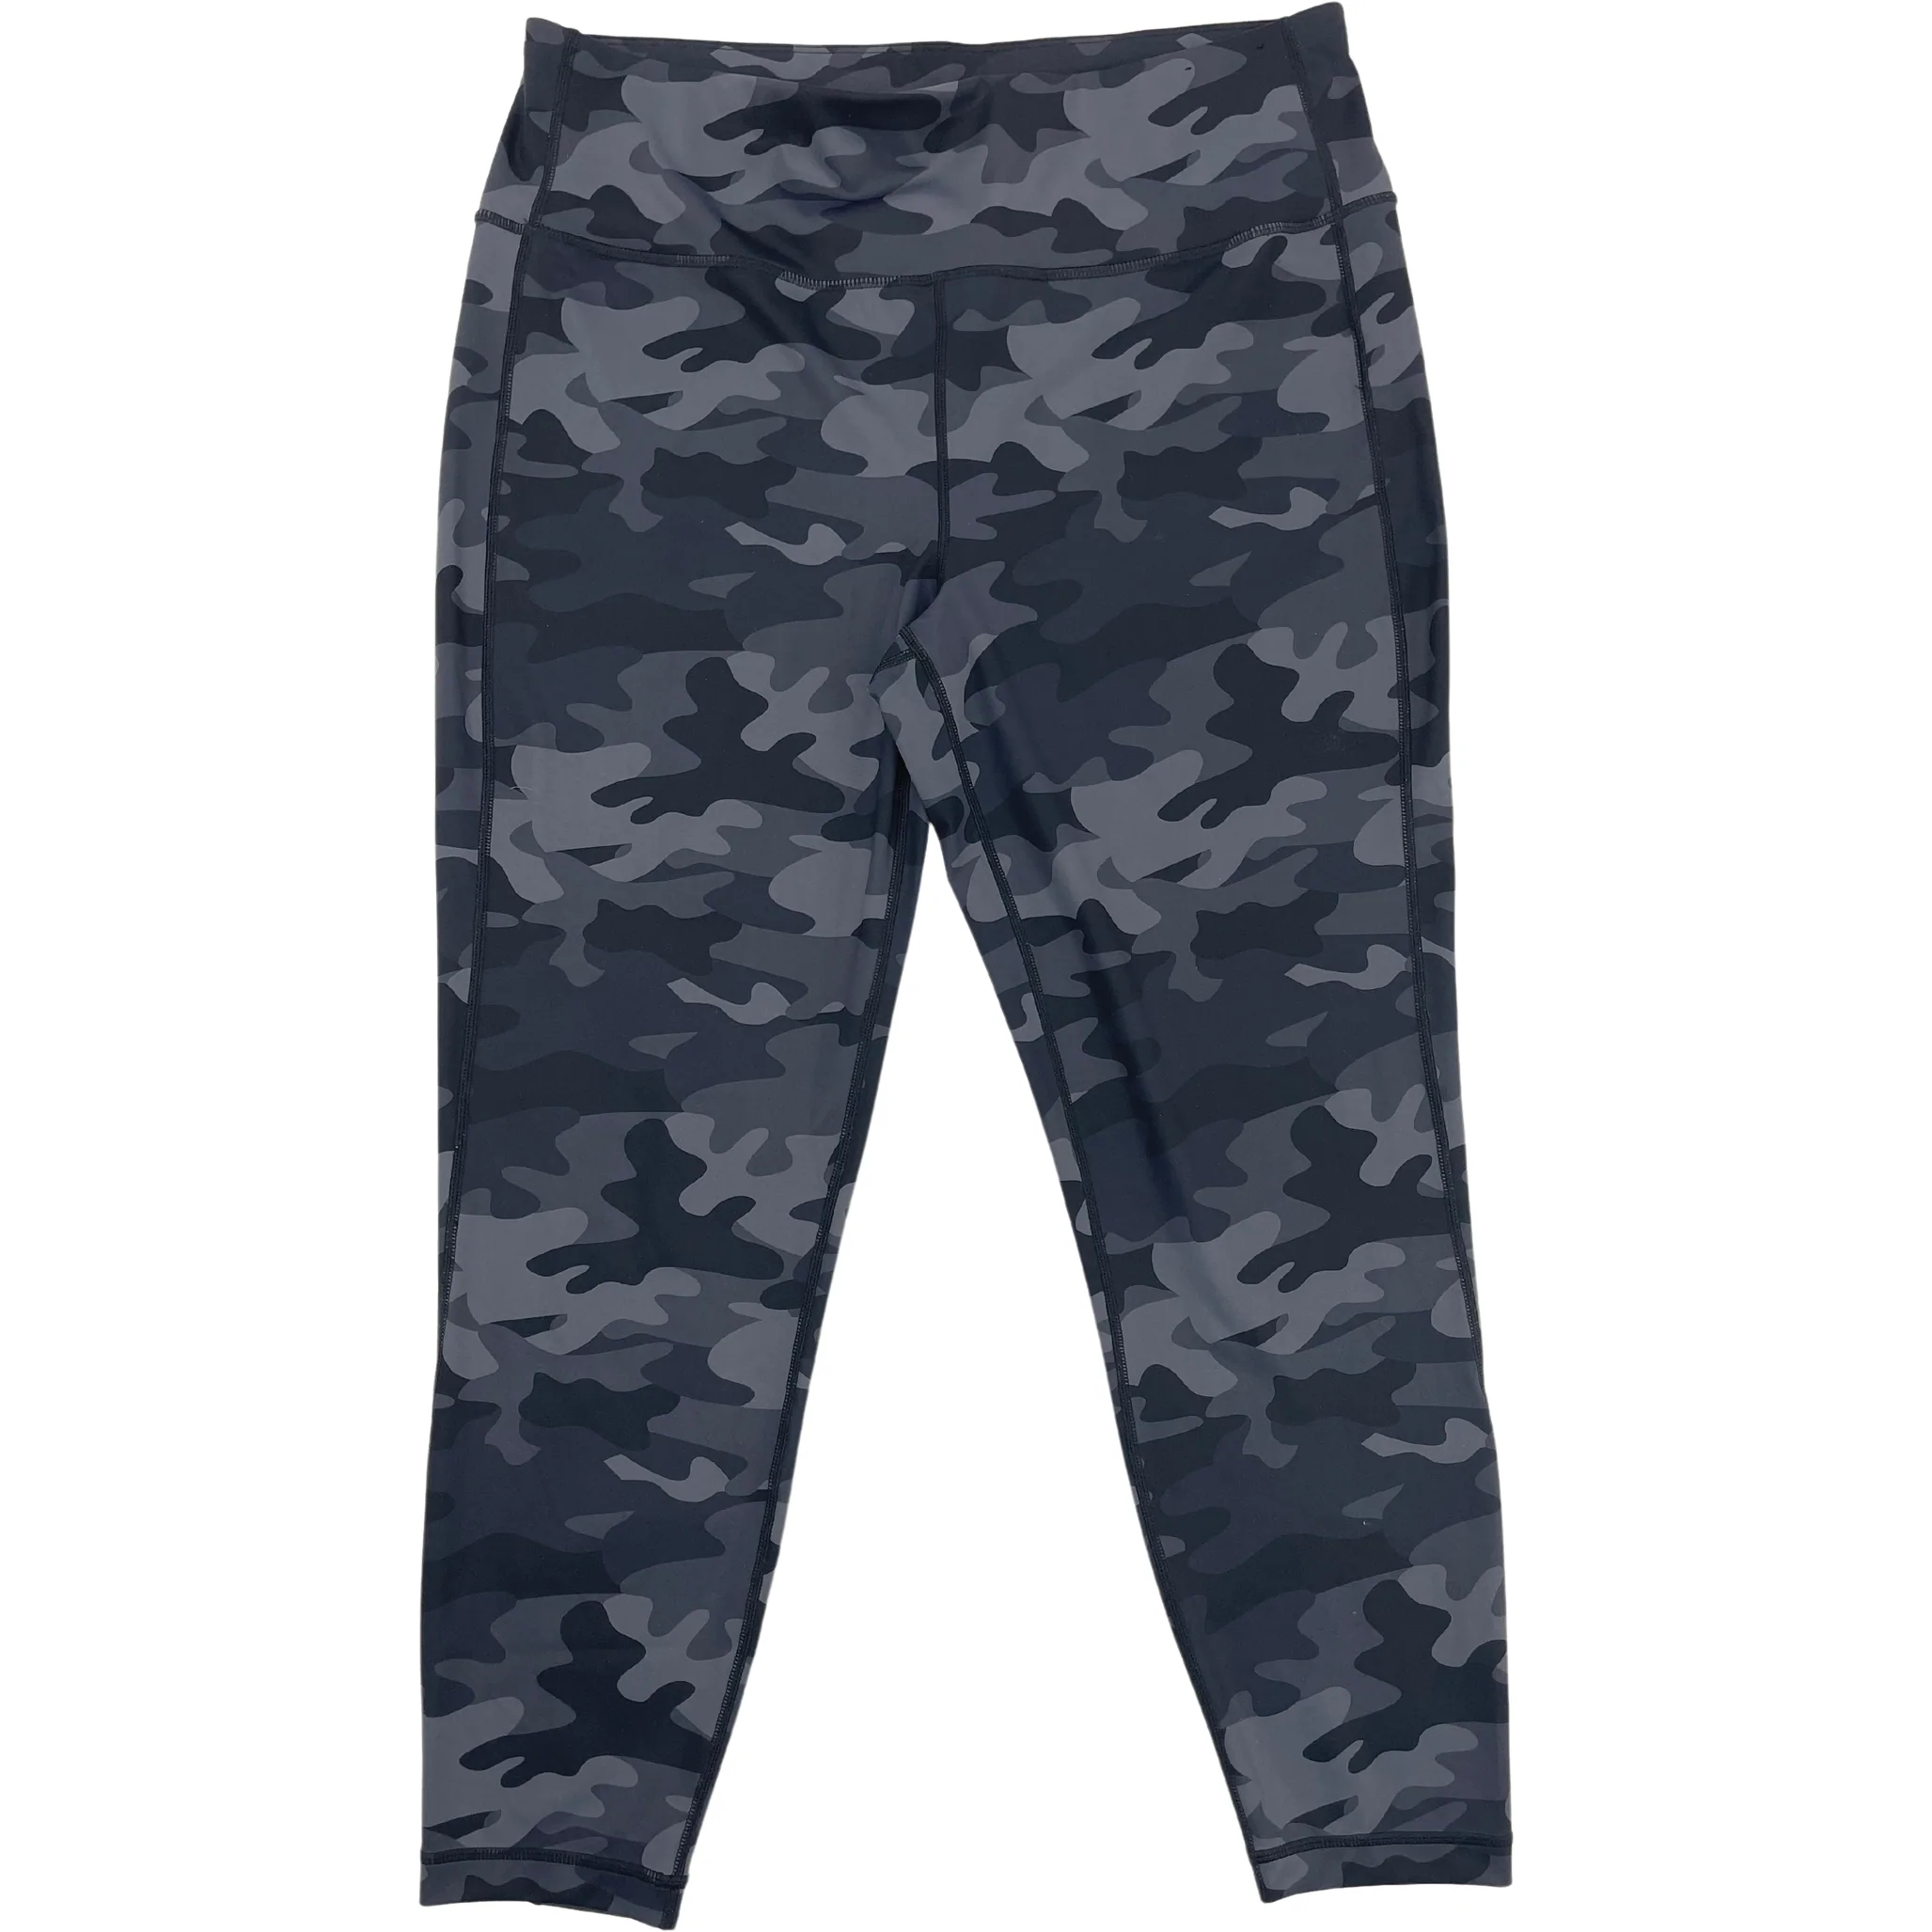 Lolë Women's Leggings / Camouflage Pattern / Black & Grey / Size Small